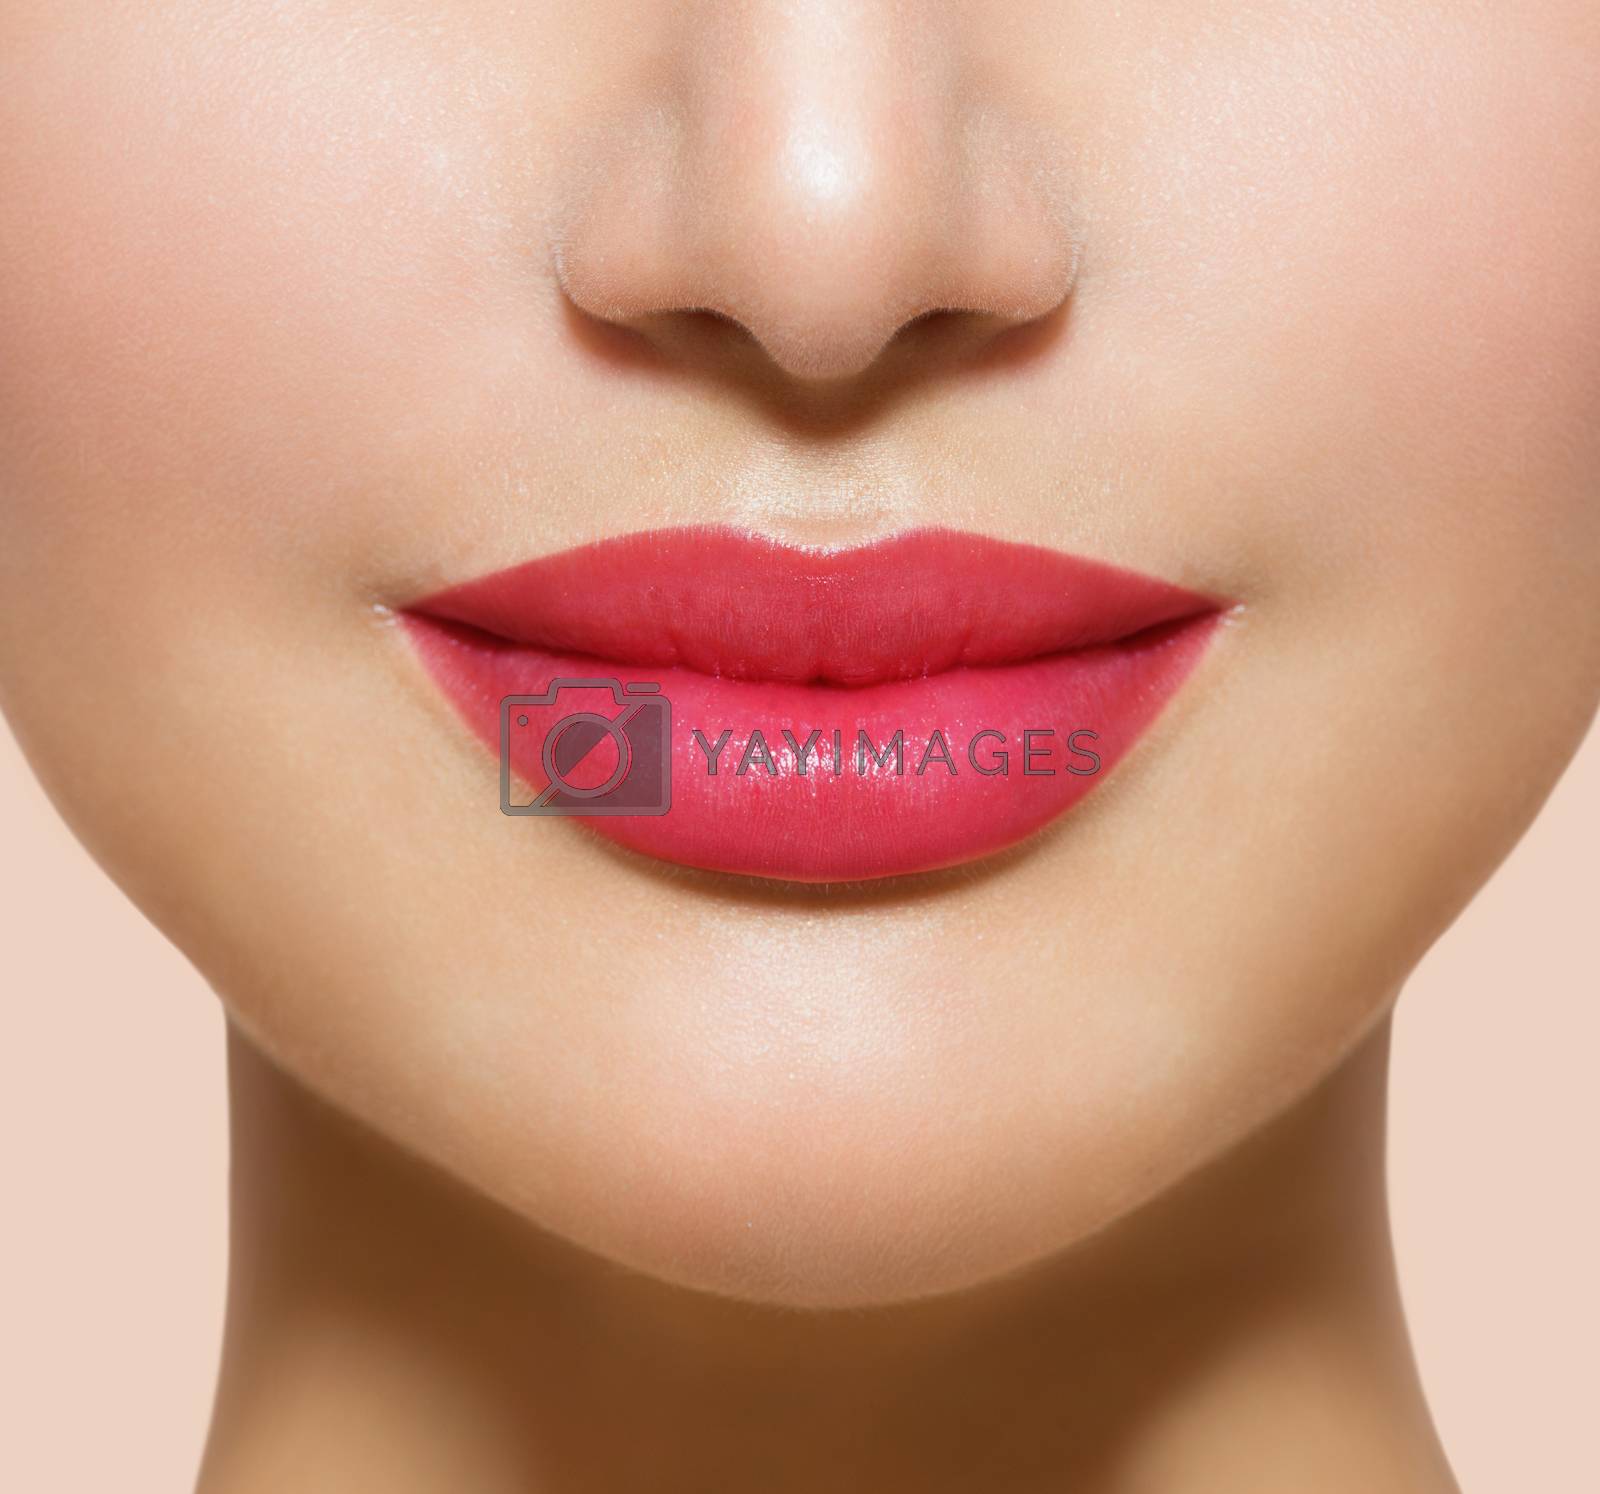 Royalty free image of Beautiful Perfect Lips. Sexy Mouth Closeup by SubbotinaA